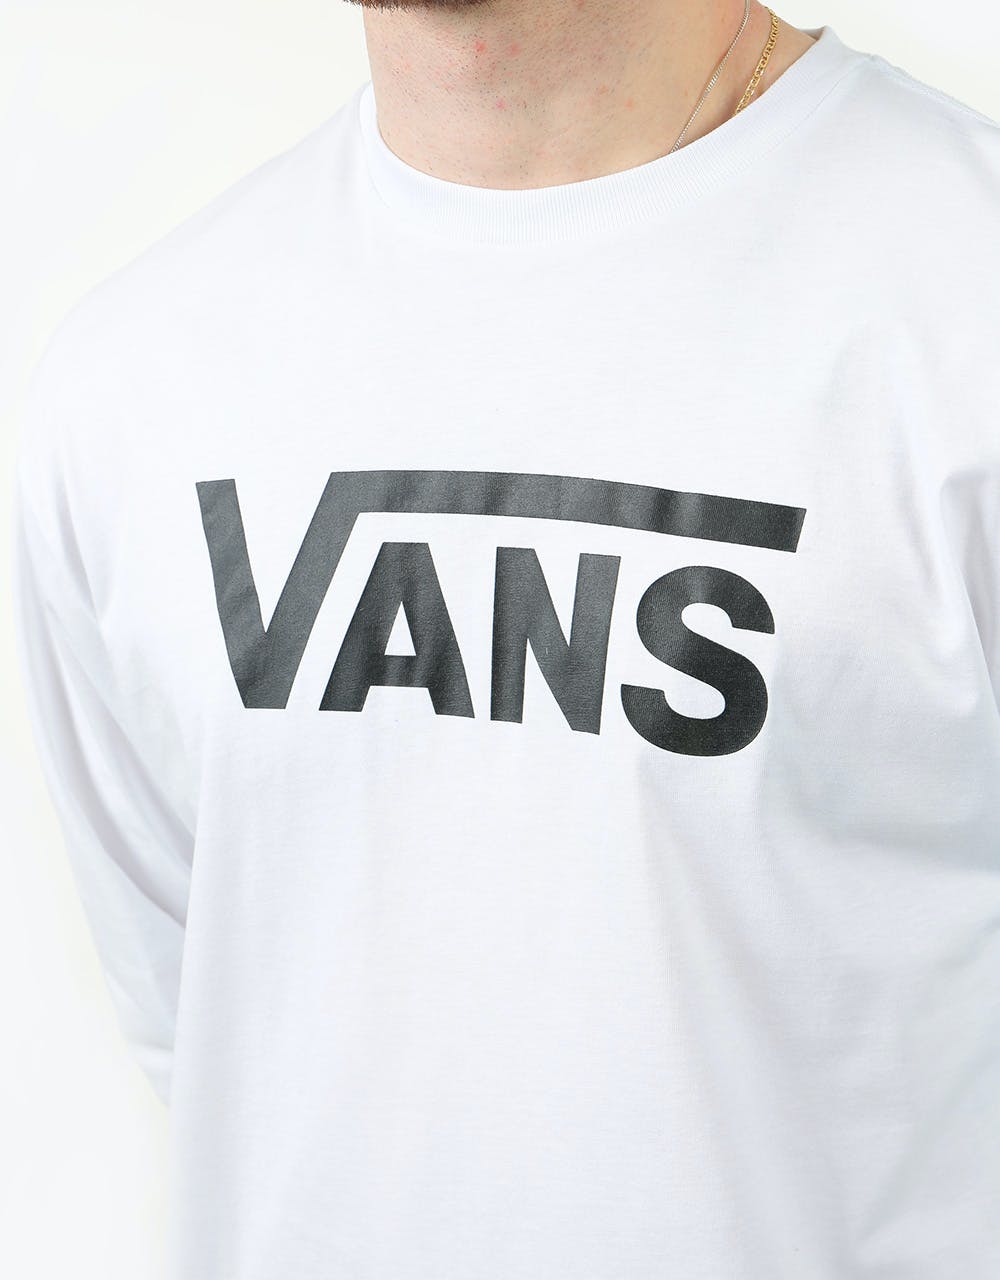 Vans Classic L/S T-Shirt - White/Black